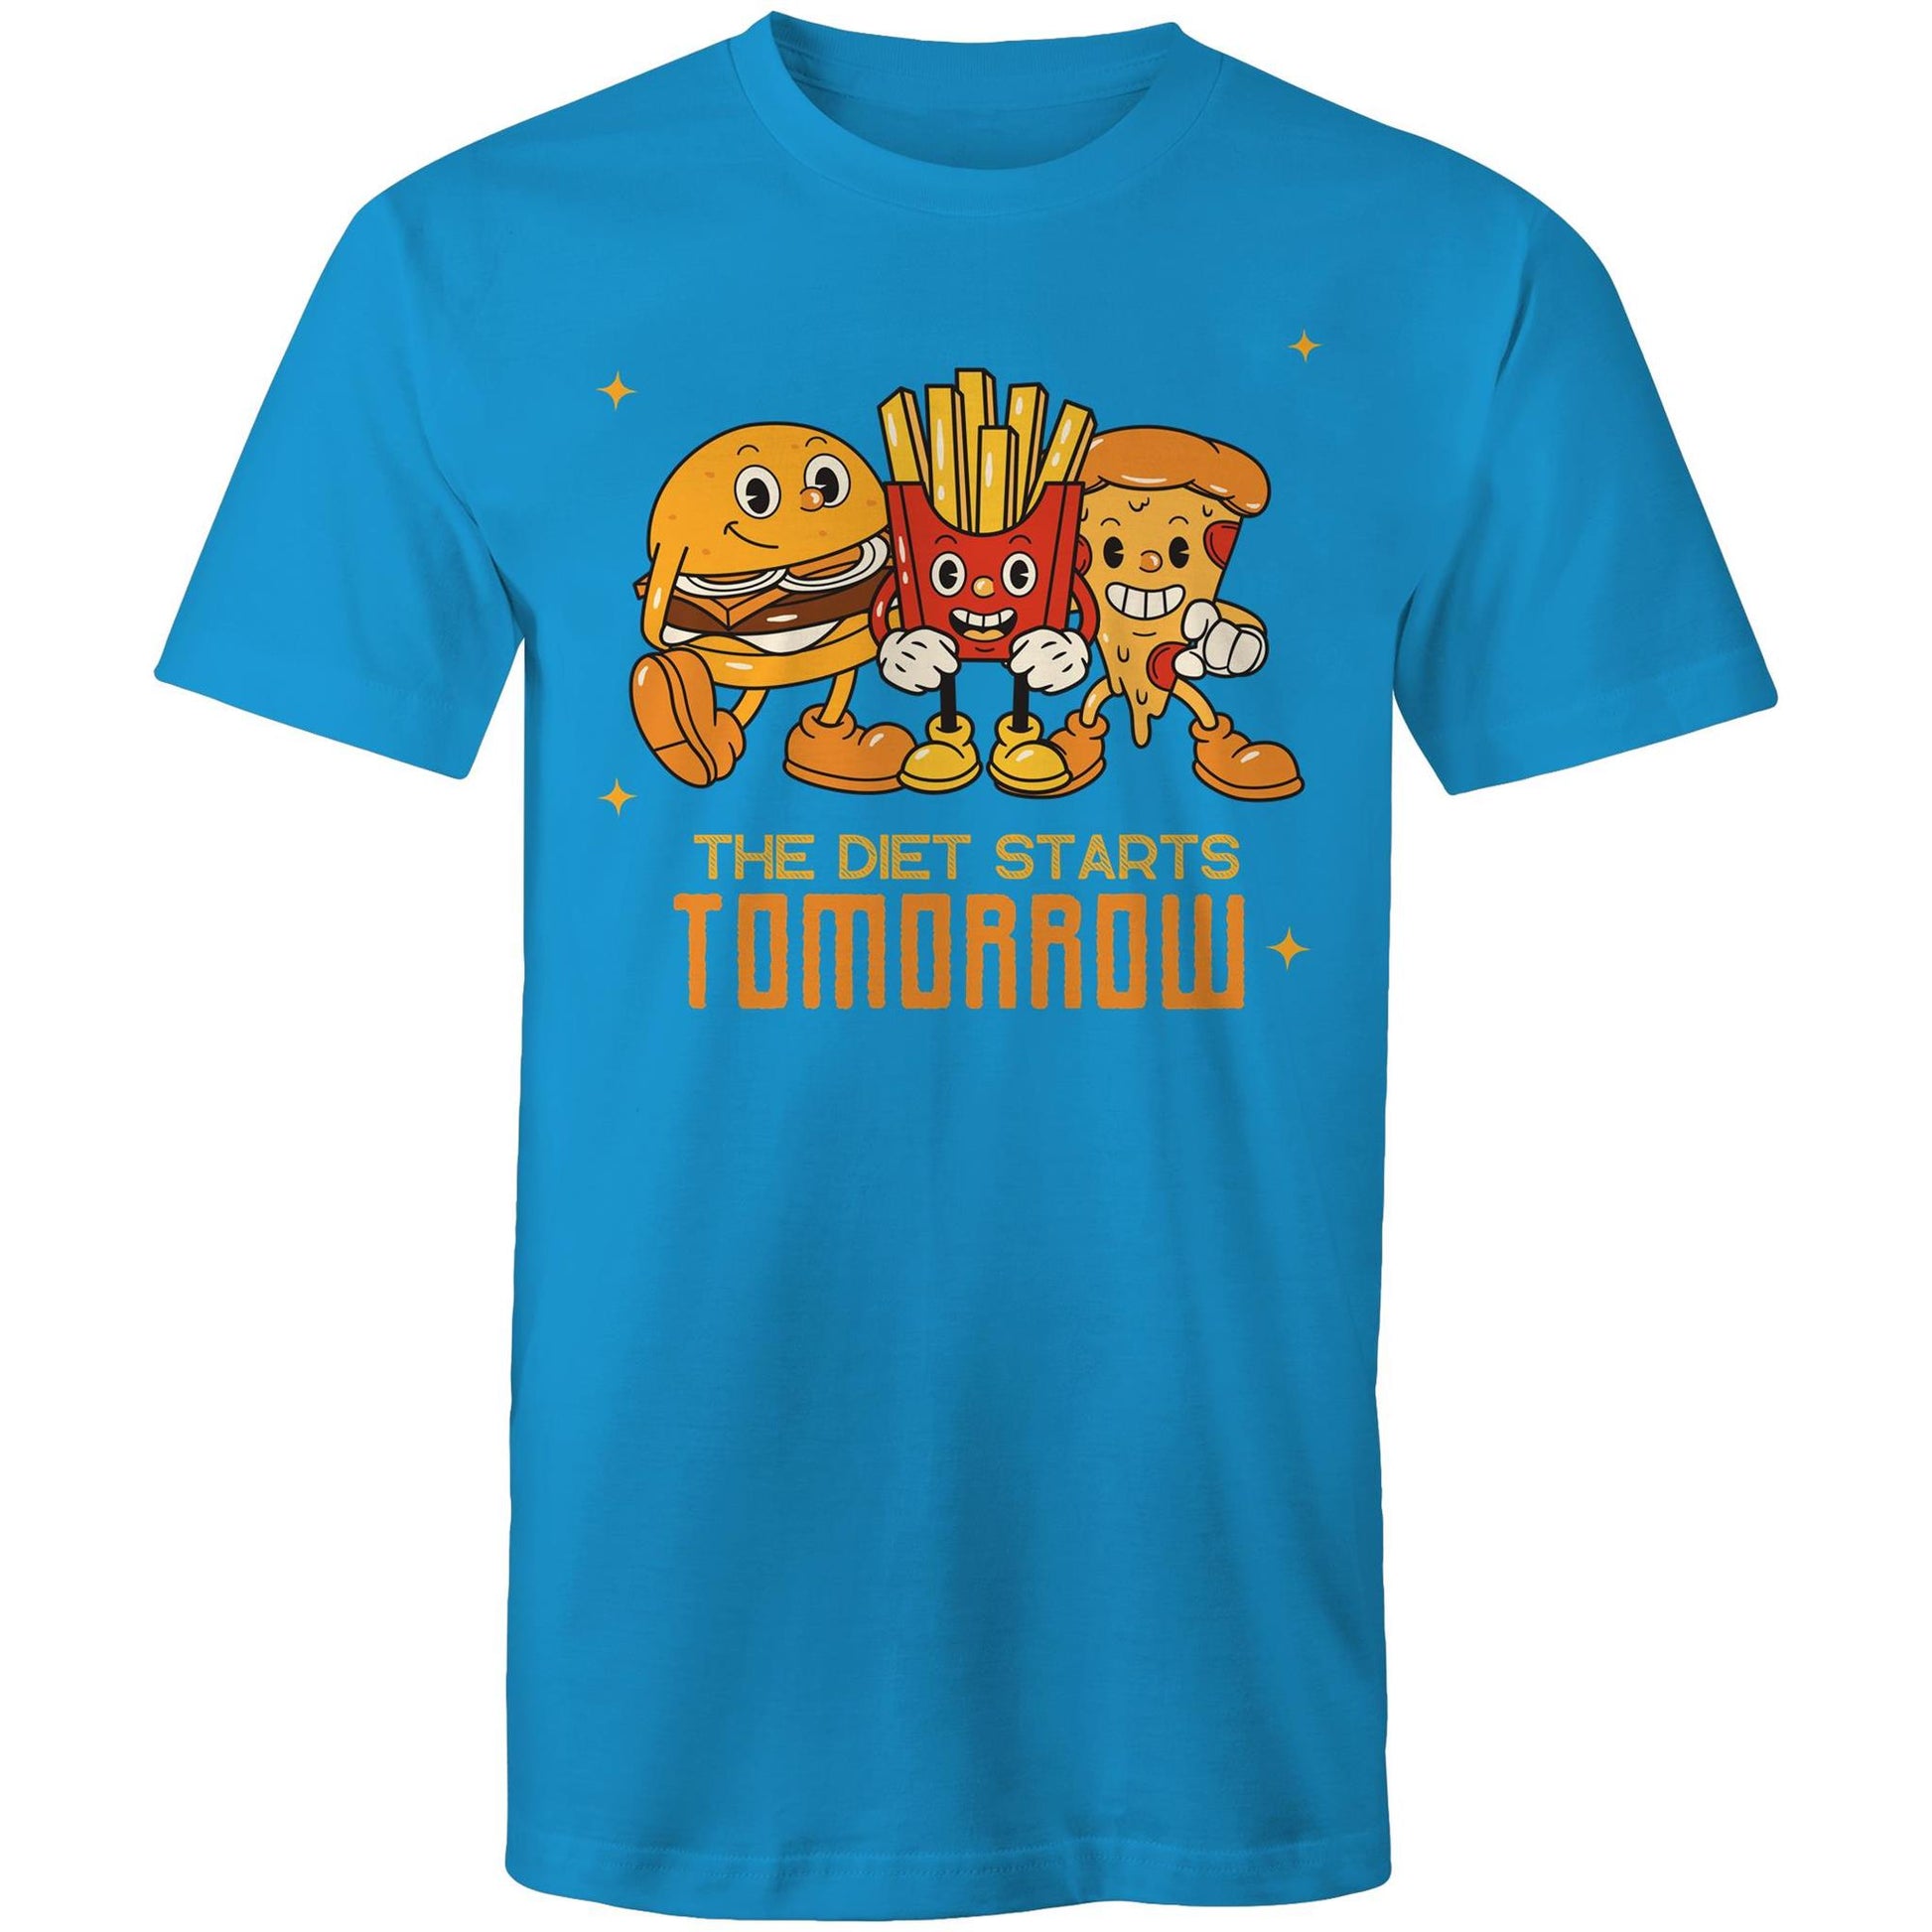 The Diet Starts Tomorrow, Hamburger, Pizza, Fries - Mens T-Shirt Arctic Blue Mens T-shirt Food Funny Retro